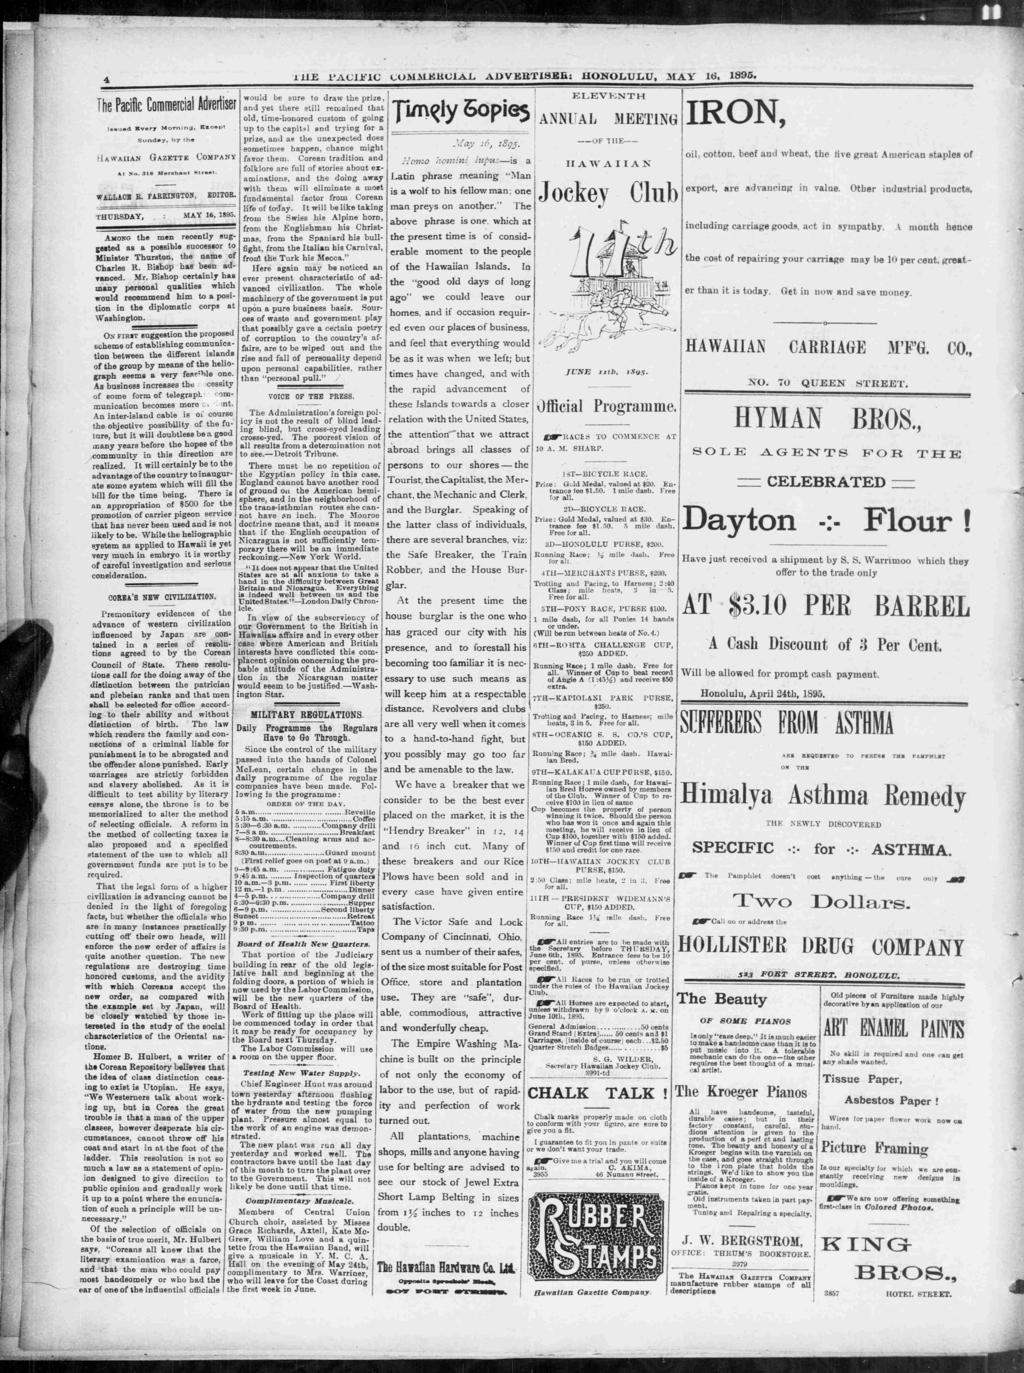 4 The Pacfc Commercal ued Bvery Mornng, Sunday, by the Advertser rte JL'ACUflC CUMMEKCAL ADVBBTSEf: HONOLULU, MAY 16. 1895.